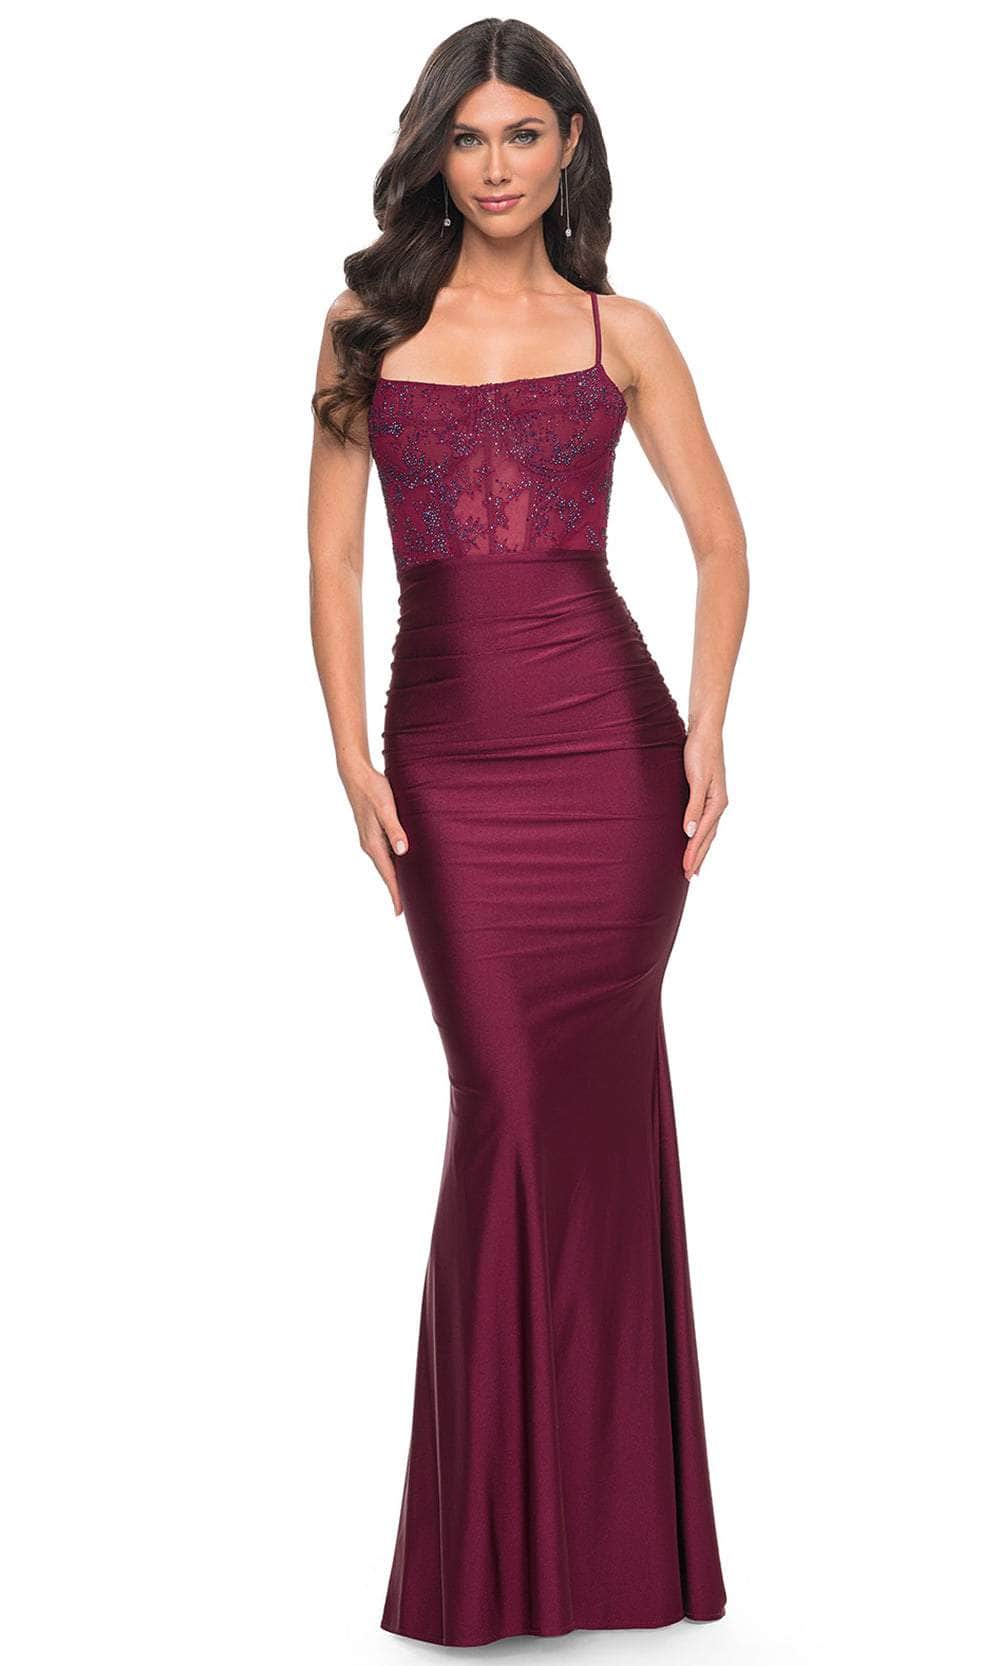 La Femme 31857 - Lace Styled Prom Dress Prom Dresses 00 / Dark Berry